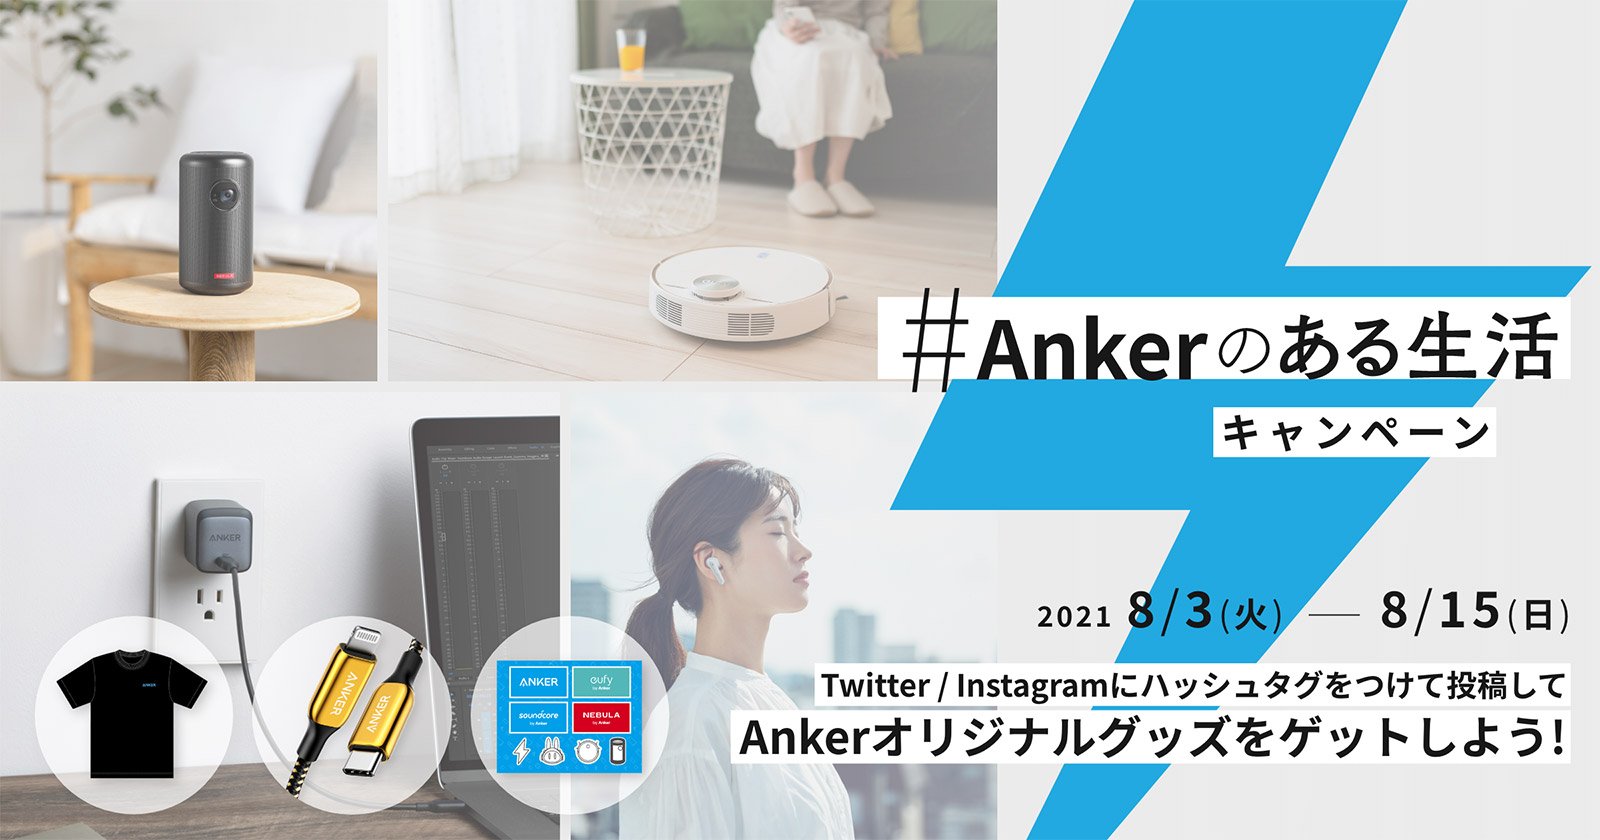 #Ankerのある生活 キャンペーン VOL.1 | #Ankerのある生活 をつけて身の回りにあるAnkerグループ製品の写真を投稿すると、Ankerオリジナルグッズが抽選で50名様に当たる！